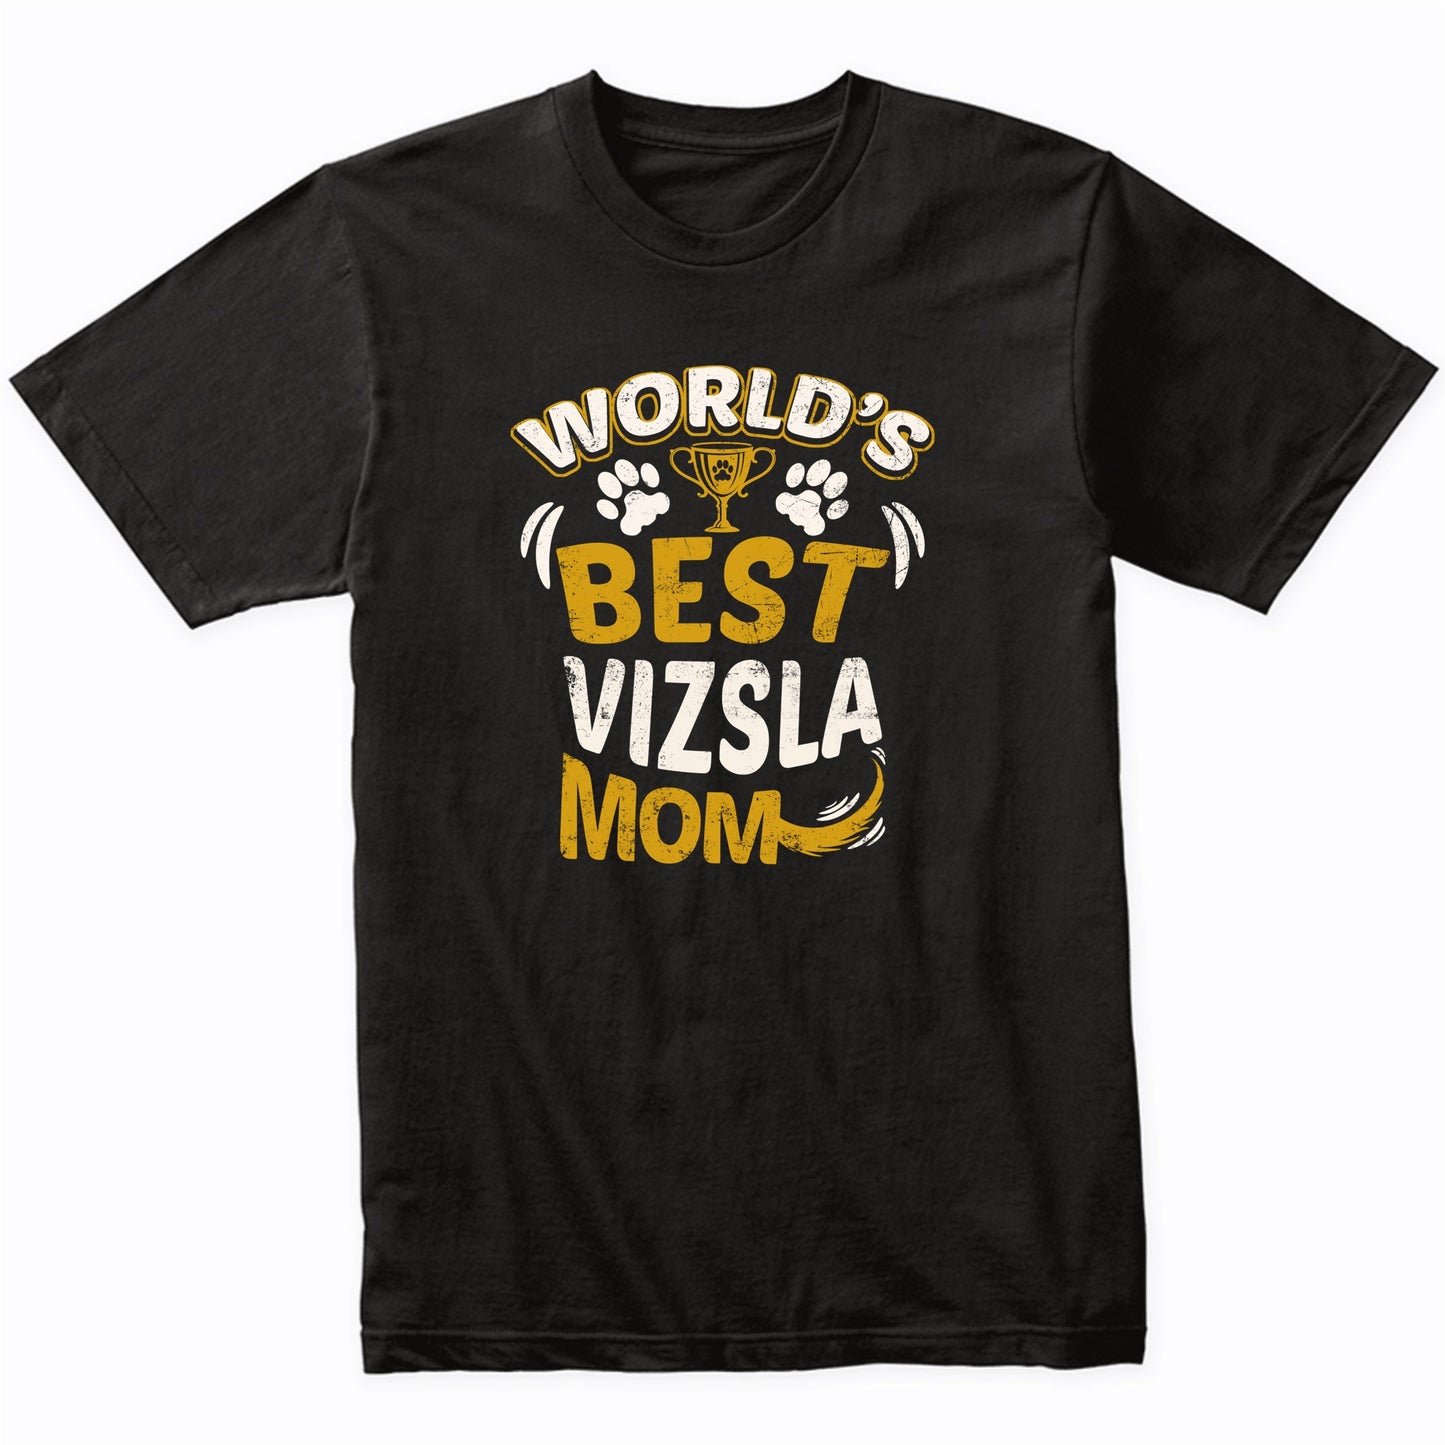 World's Best Vizsla Mom Graphic T-Shirt